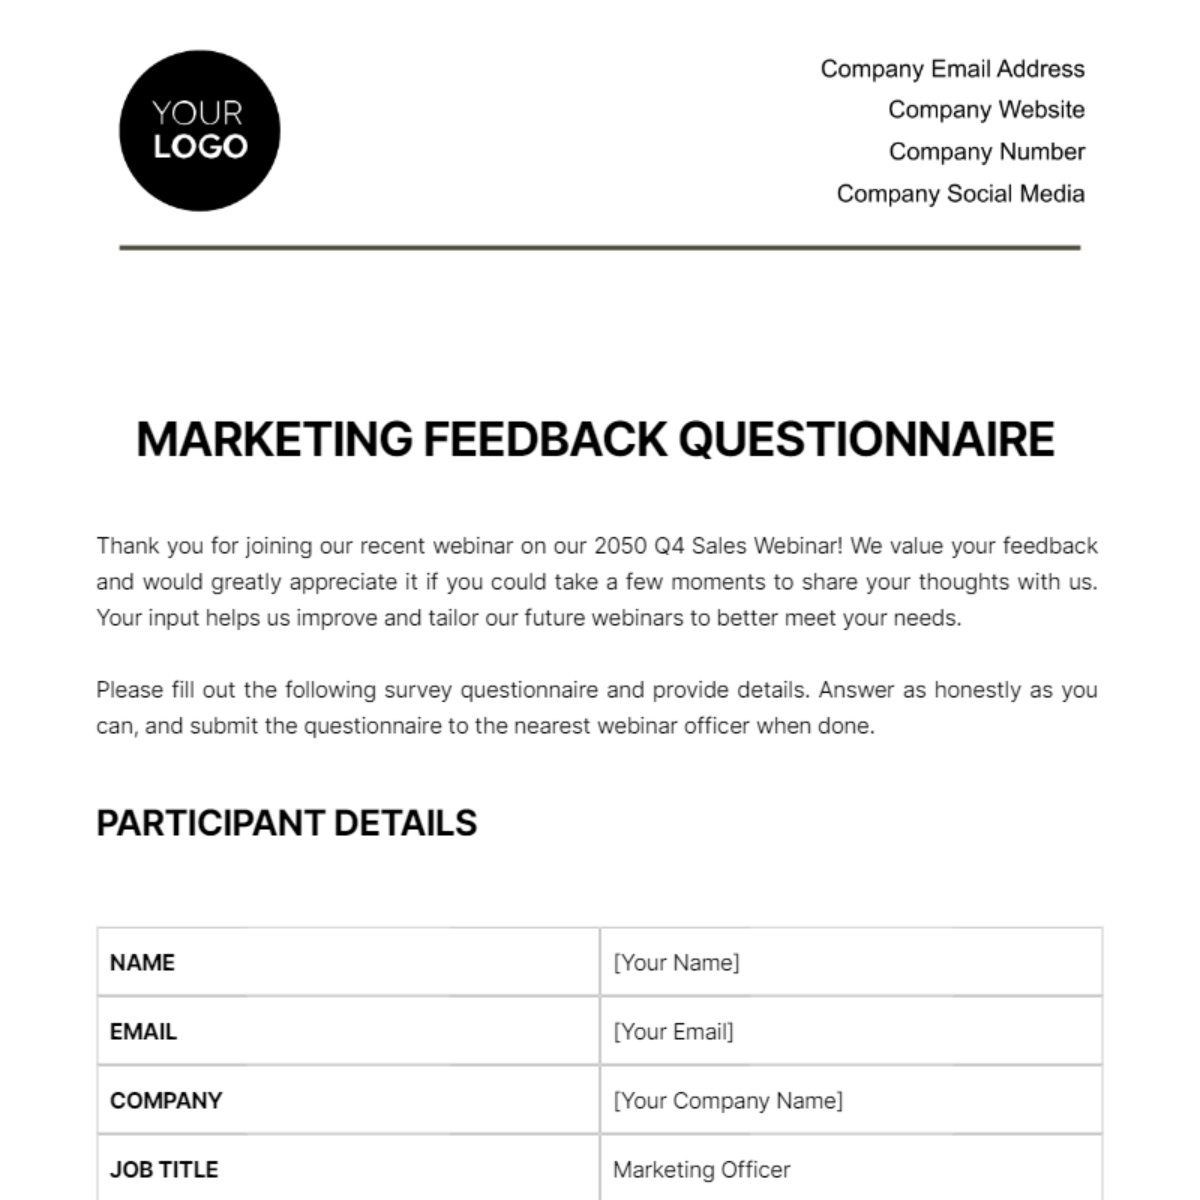 Marketing Feedback Questionnaire for Webinars Template